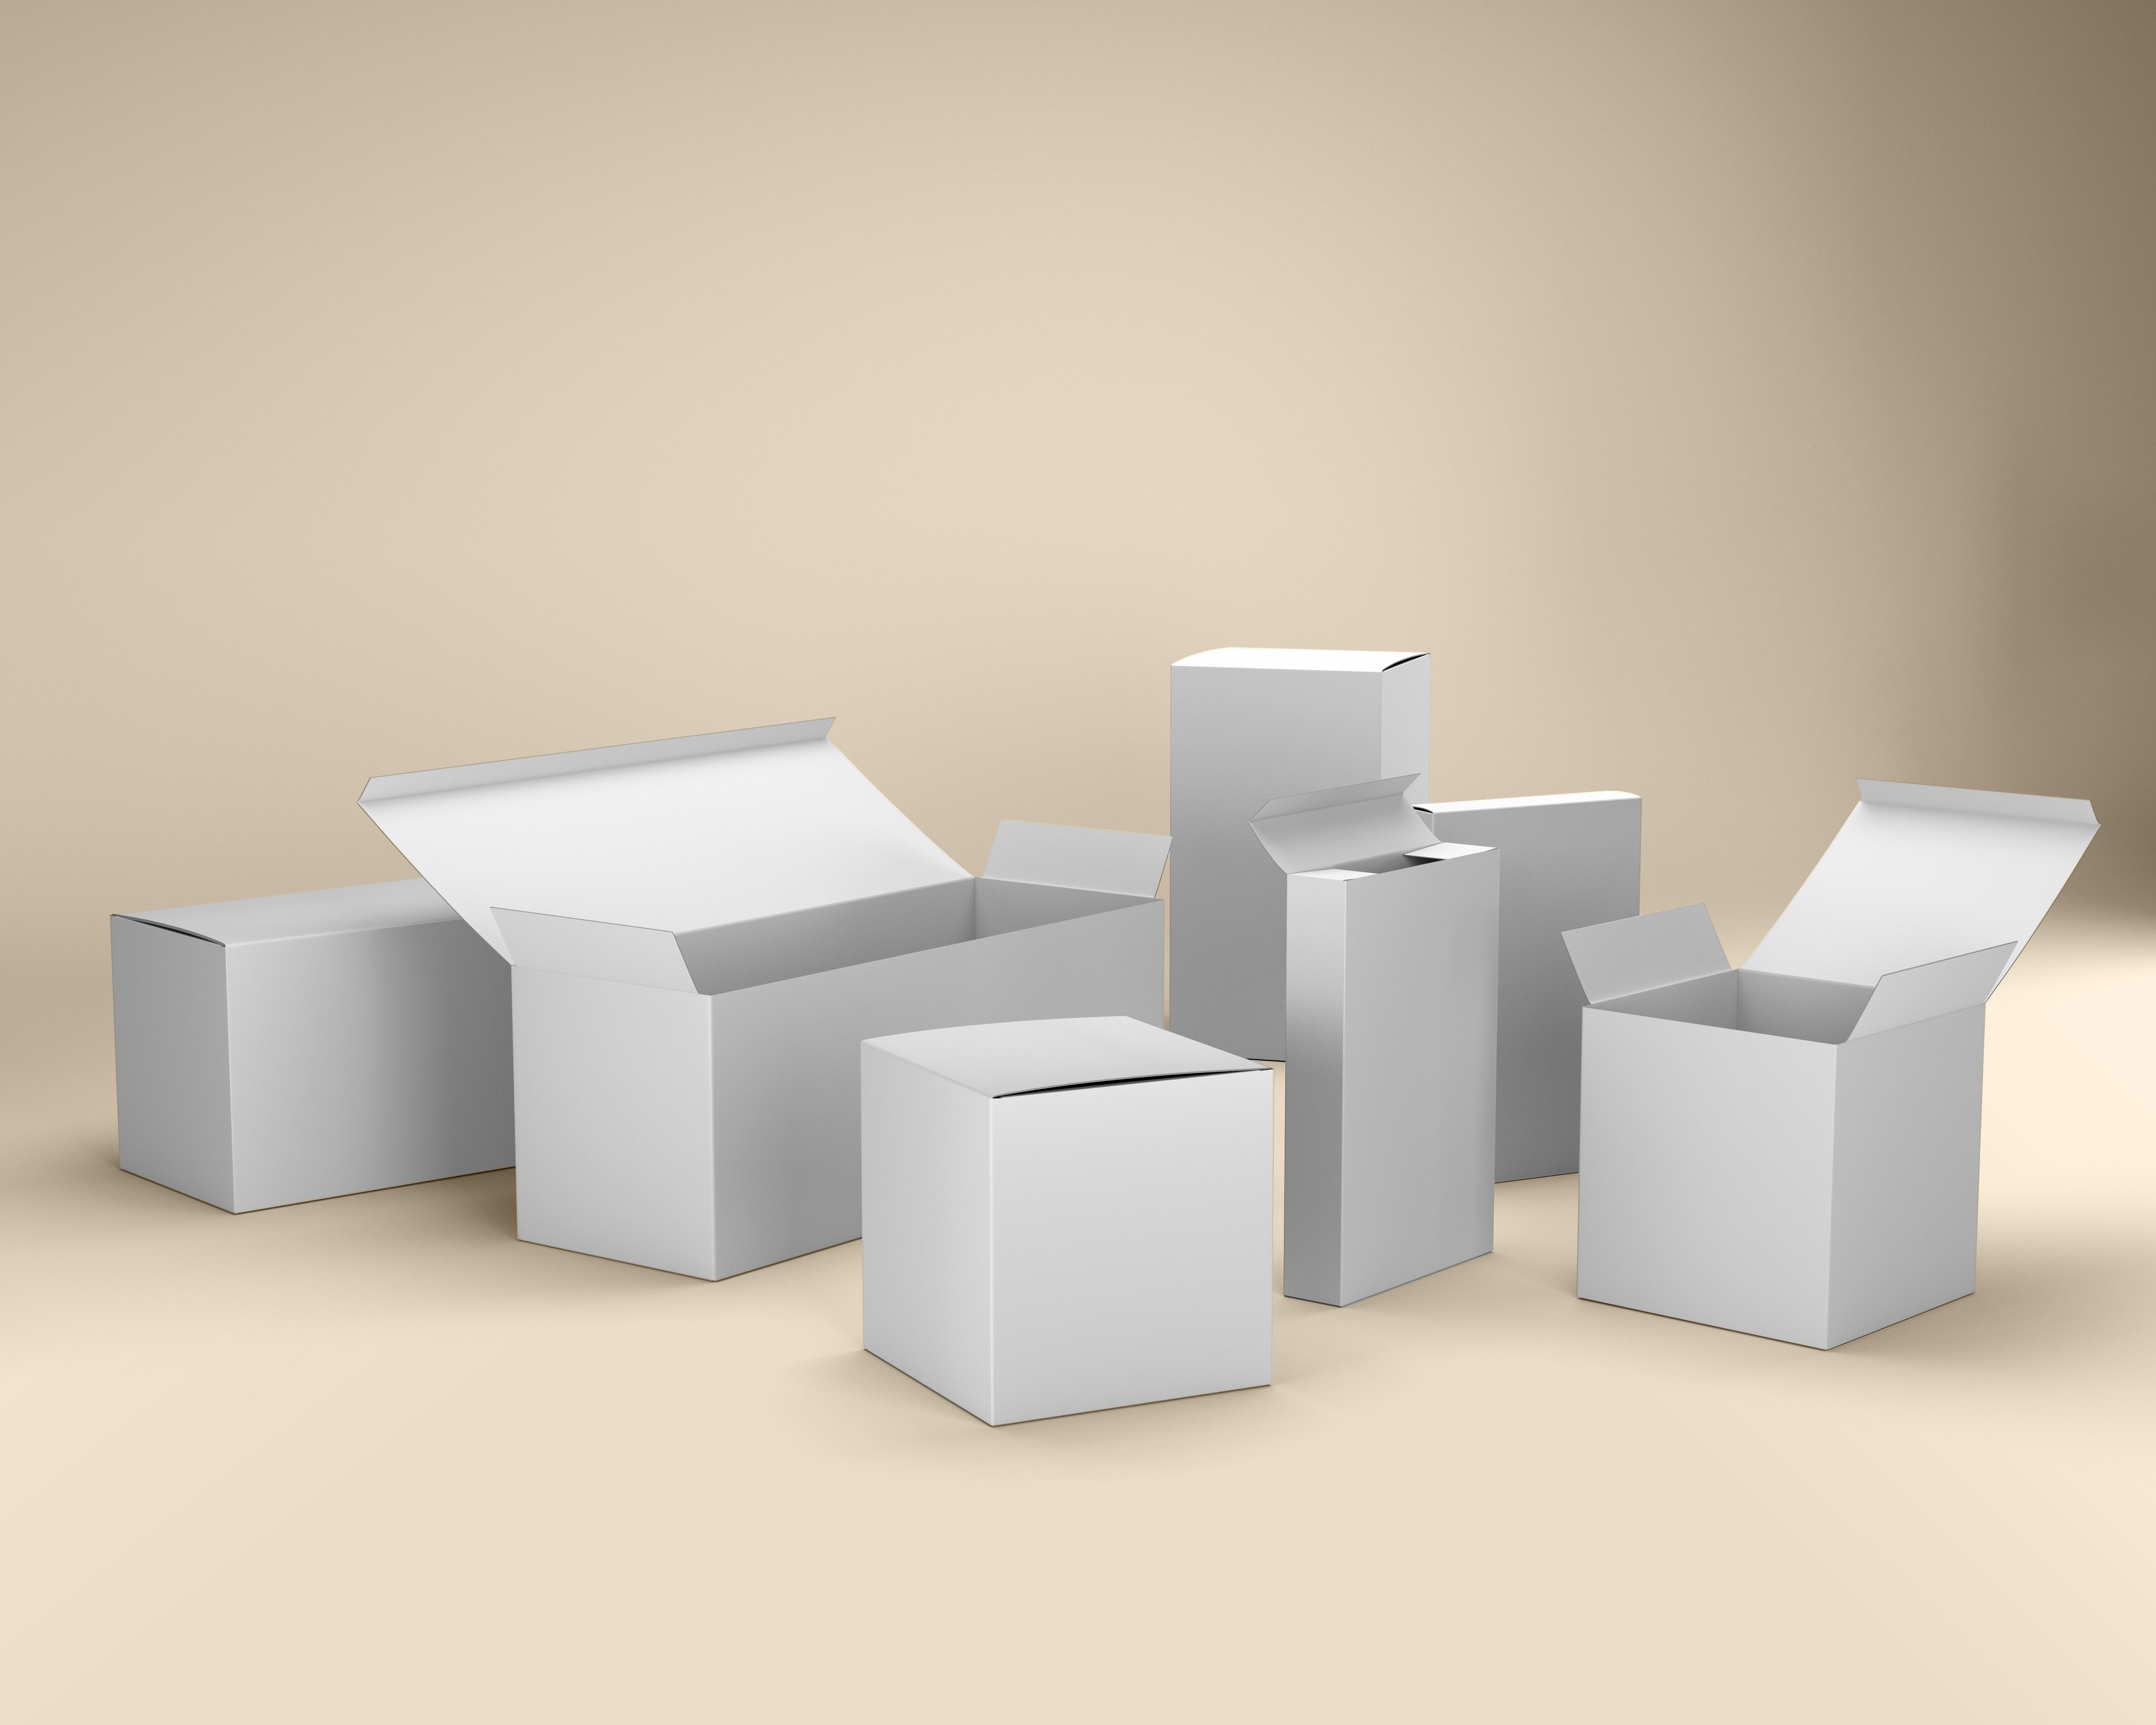 Product Box (White SBS Cardboard) - 2 ½ x 1 x 2 ½